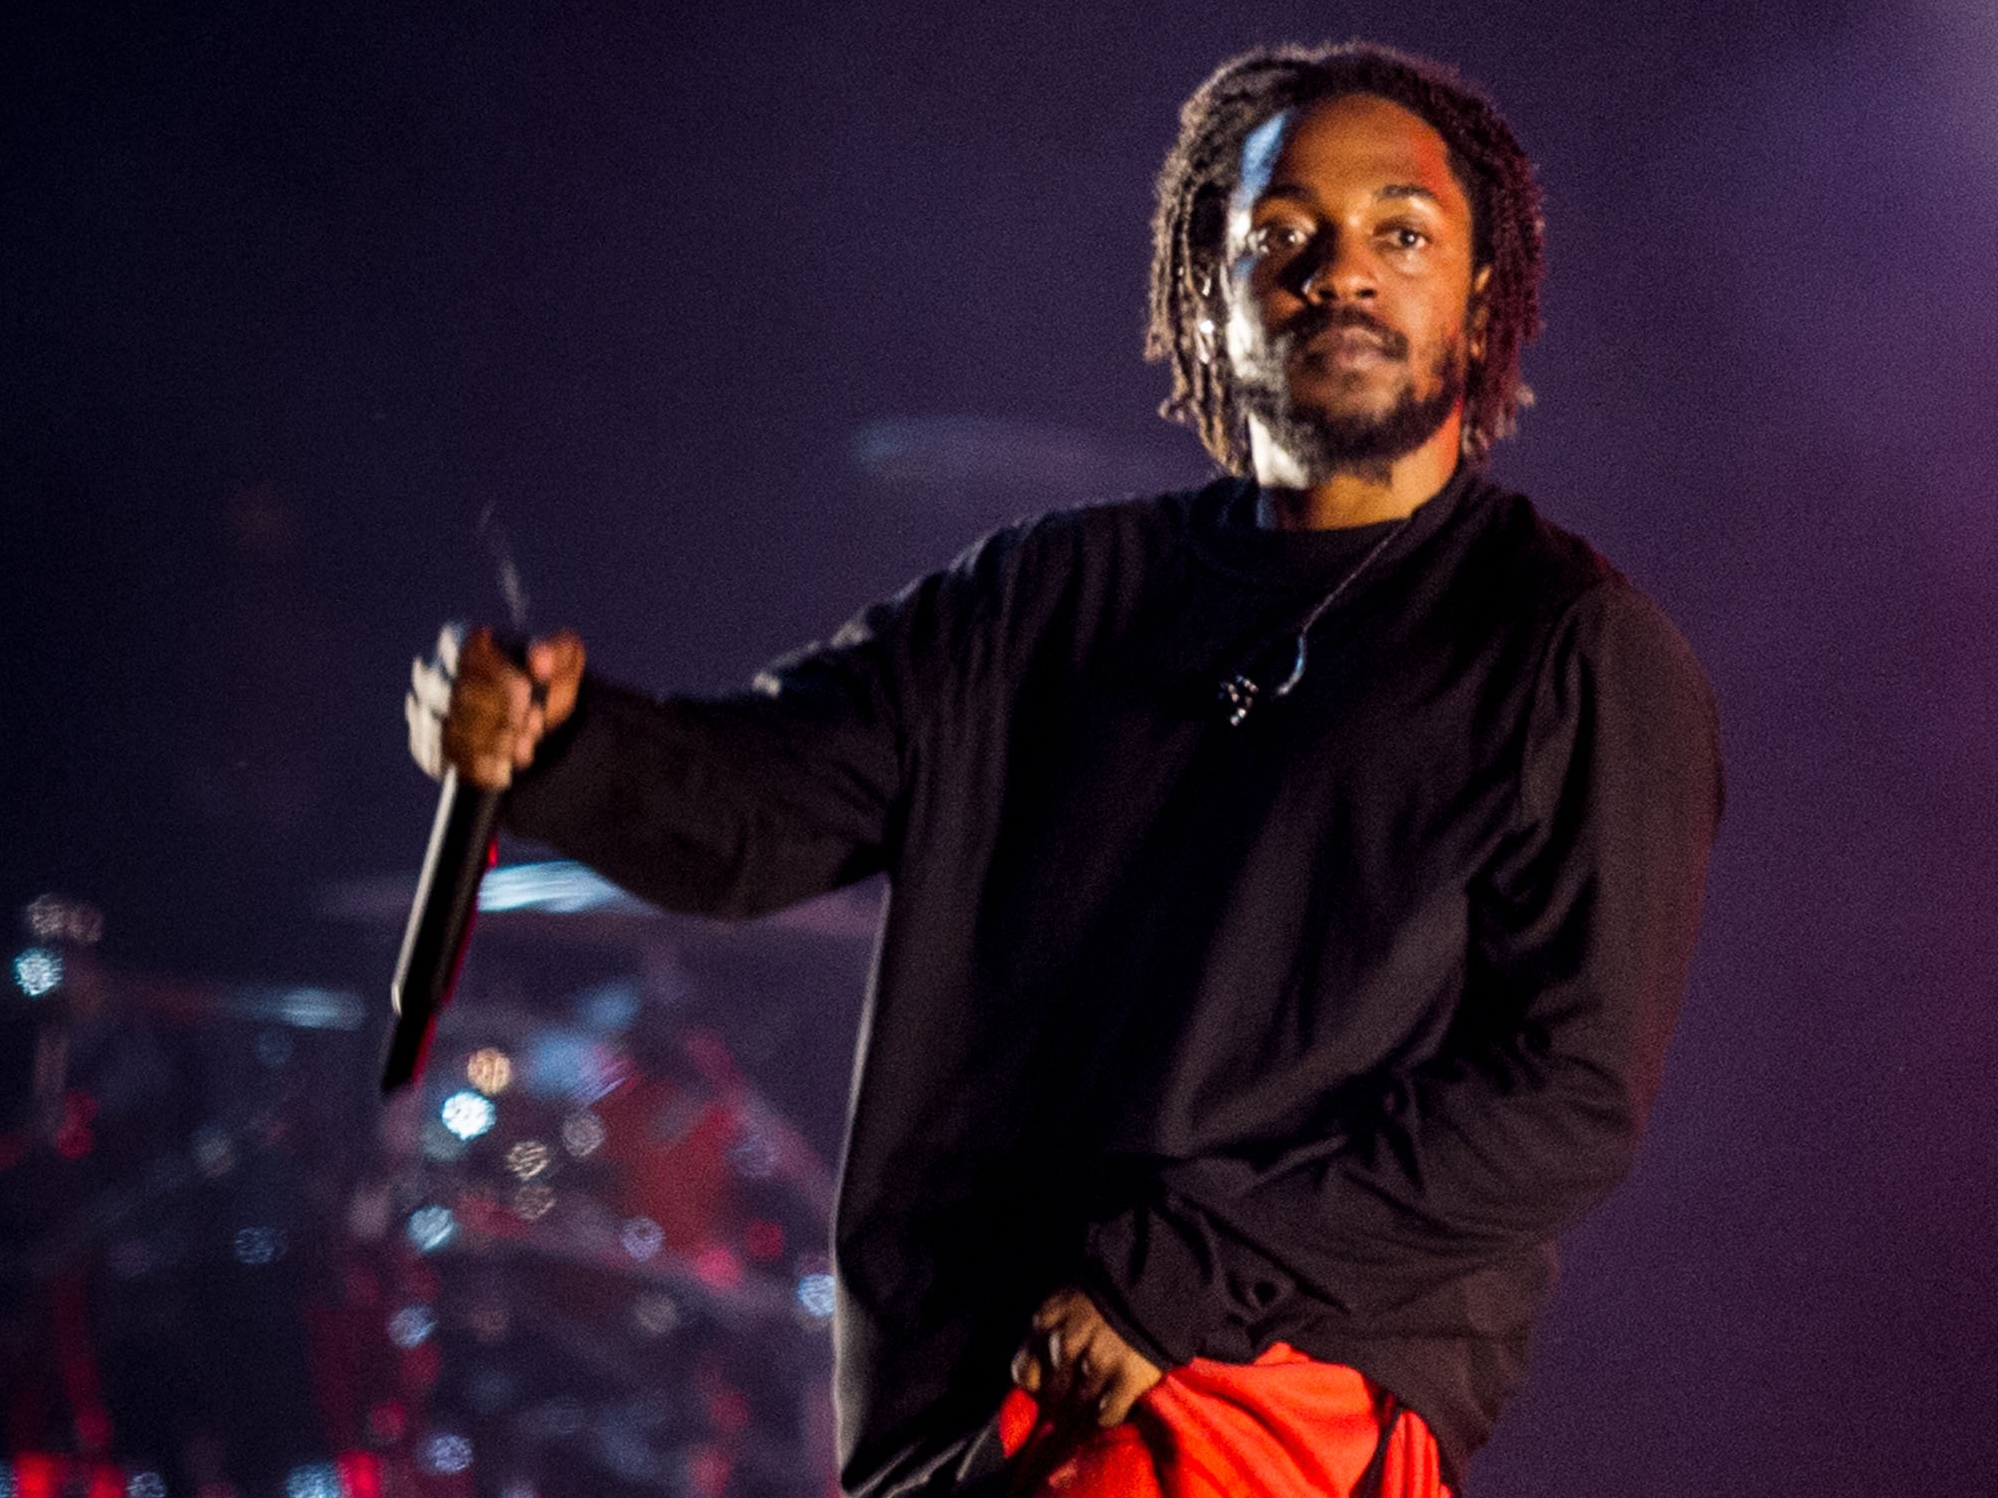 Kendrick Lamar tour 2022 How to buy tickets, schedule, dates